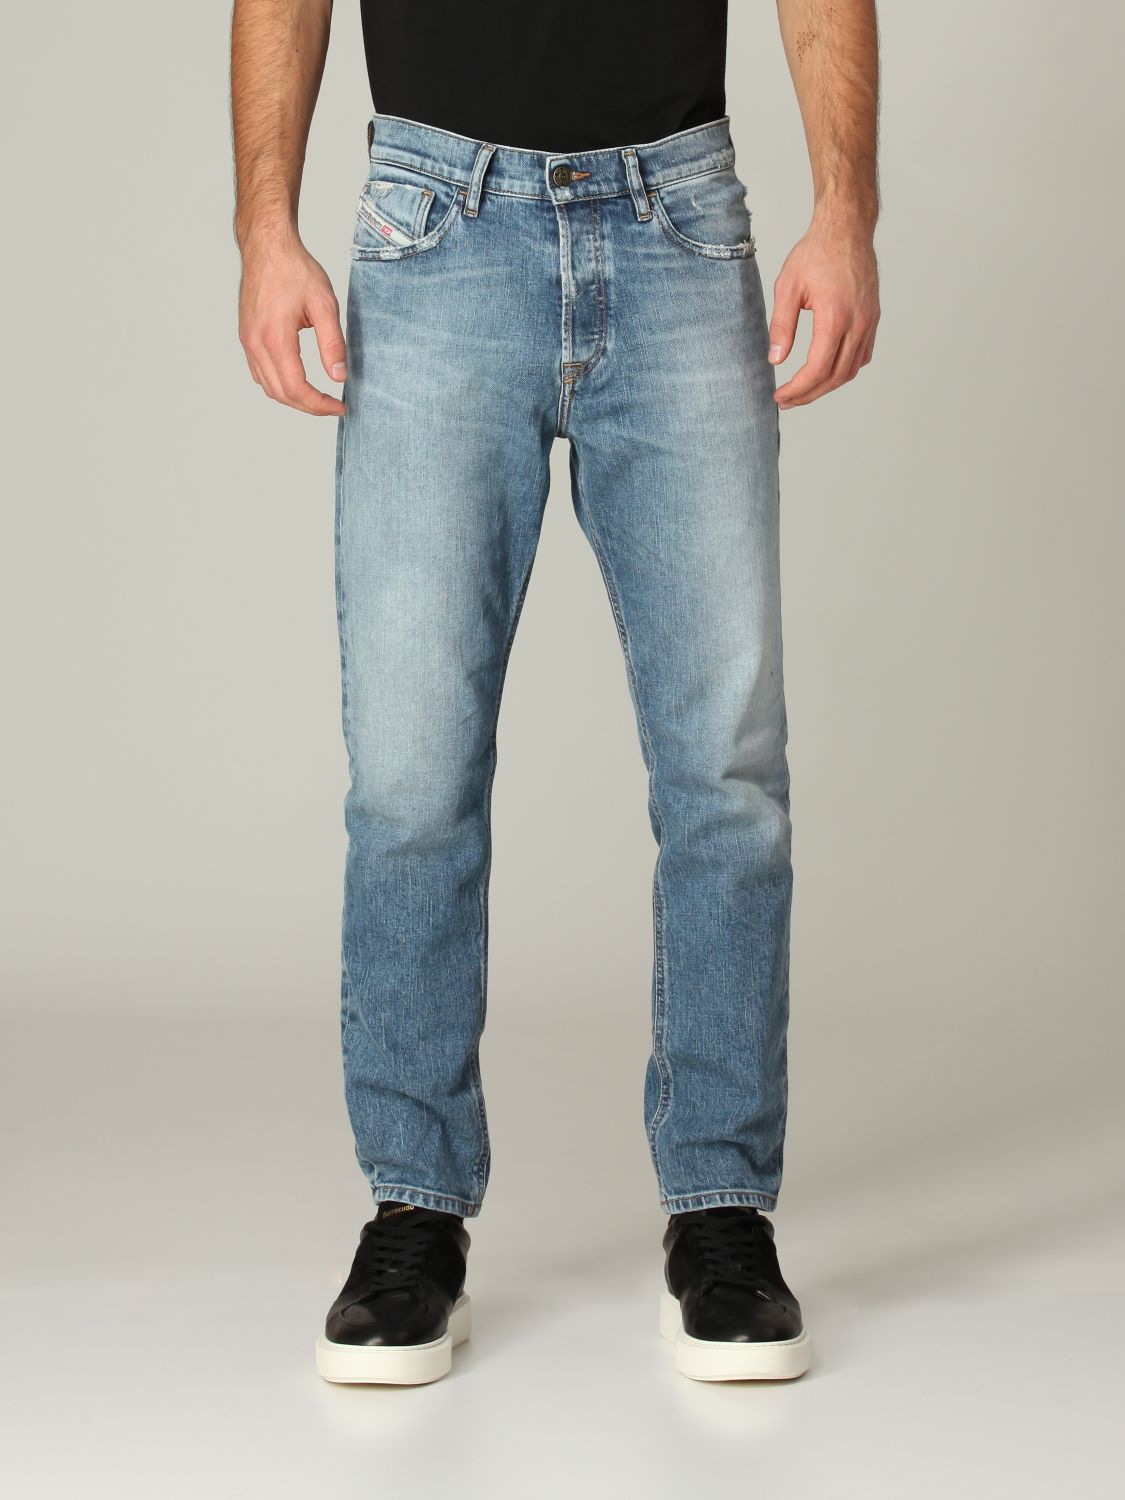 DIESEL: 5-pocket jeans in washed denim - Denim | Diesel jeans A01714 ...